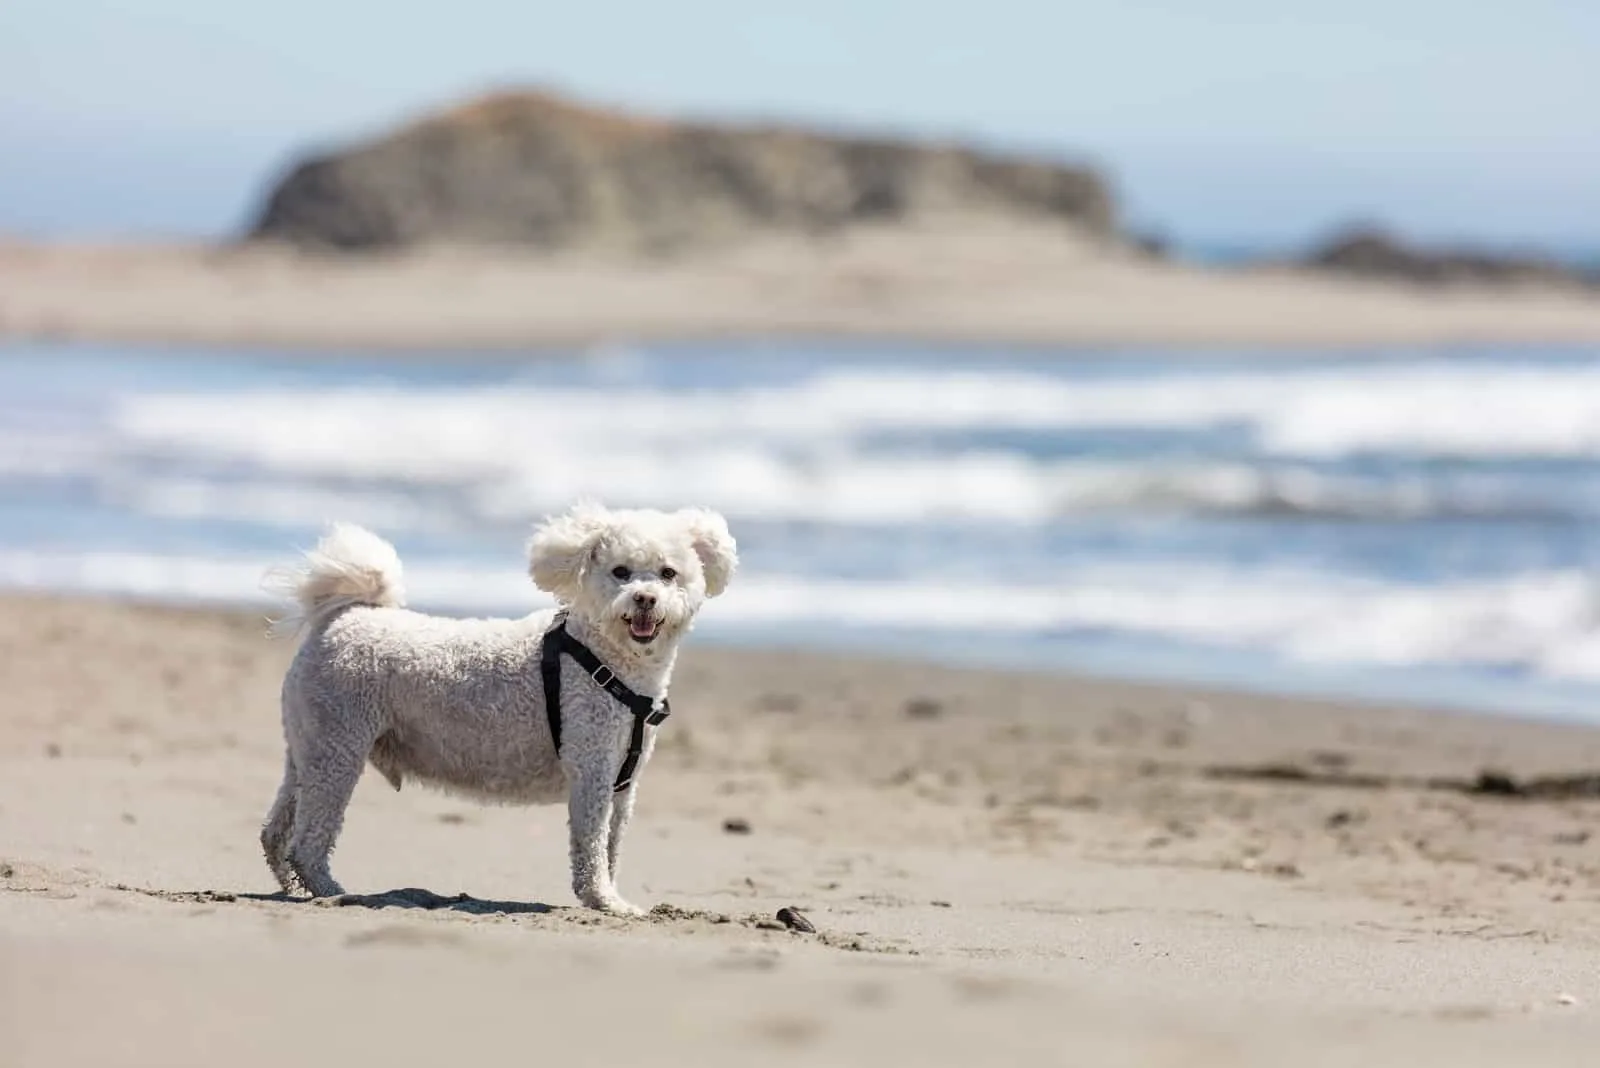 white Maltipoo enjoys the sandy beach